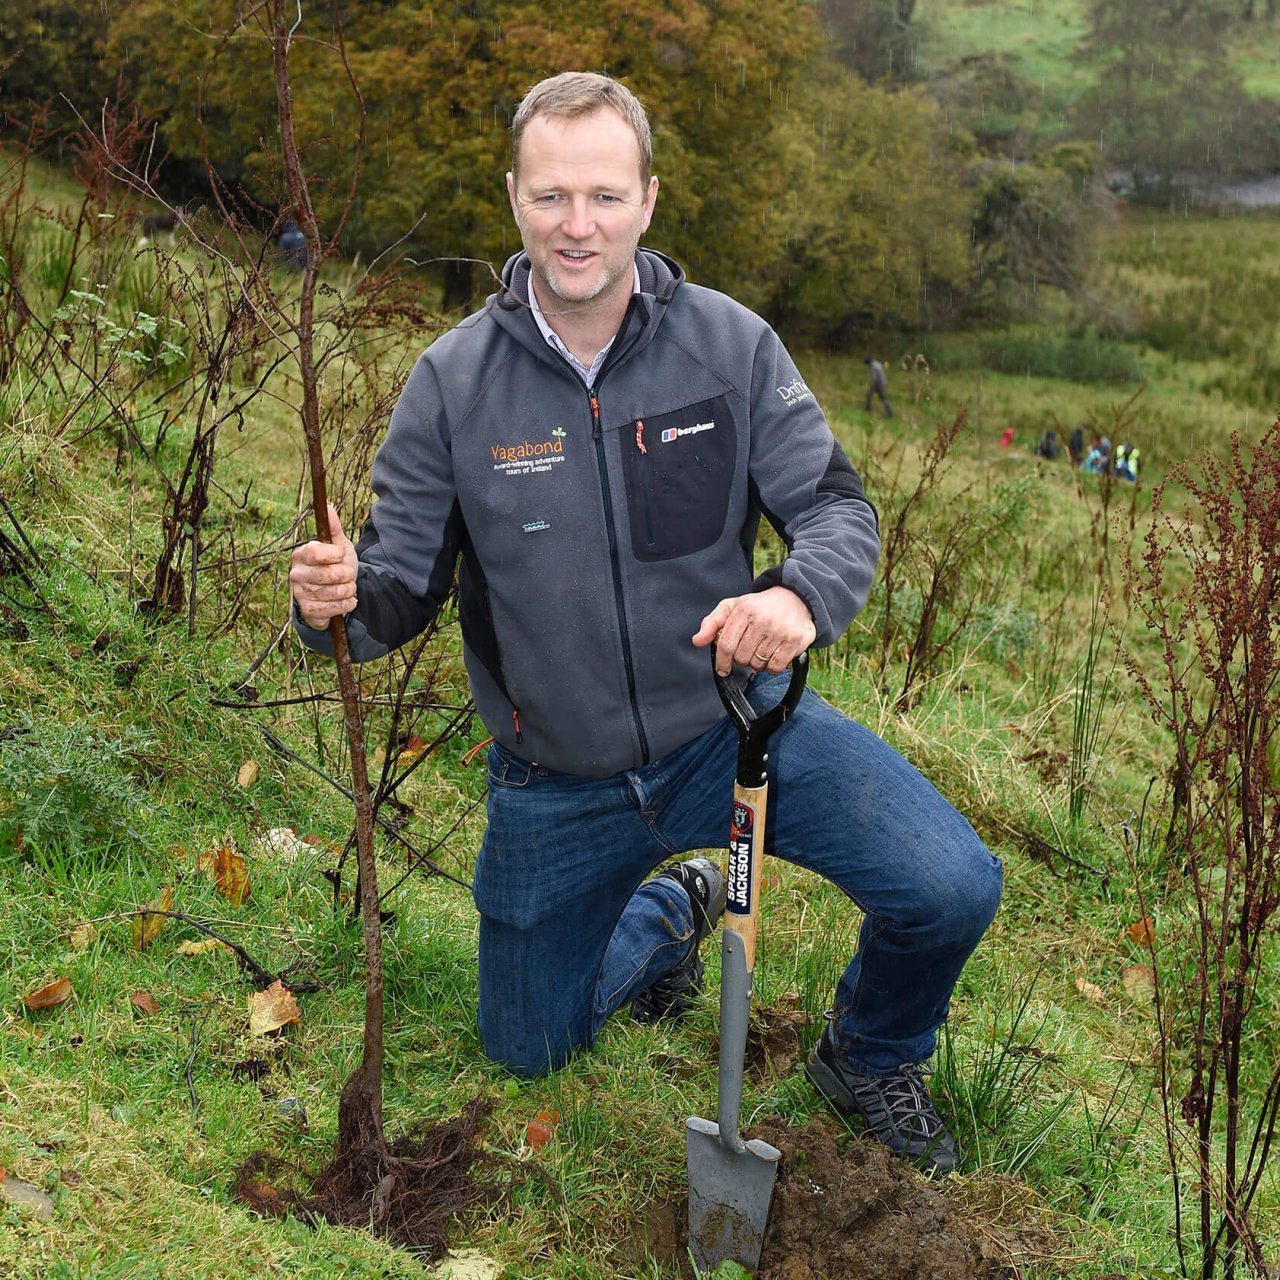 Rob Rankin of Vagabond small group tours of Ireland planting a tree